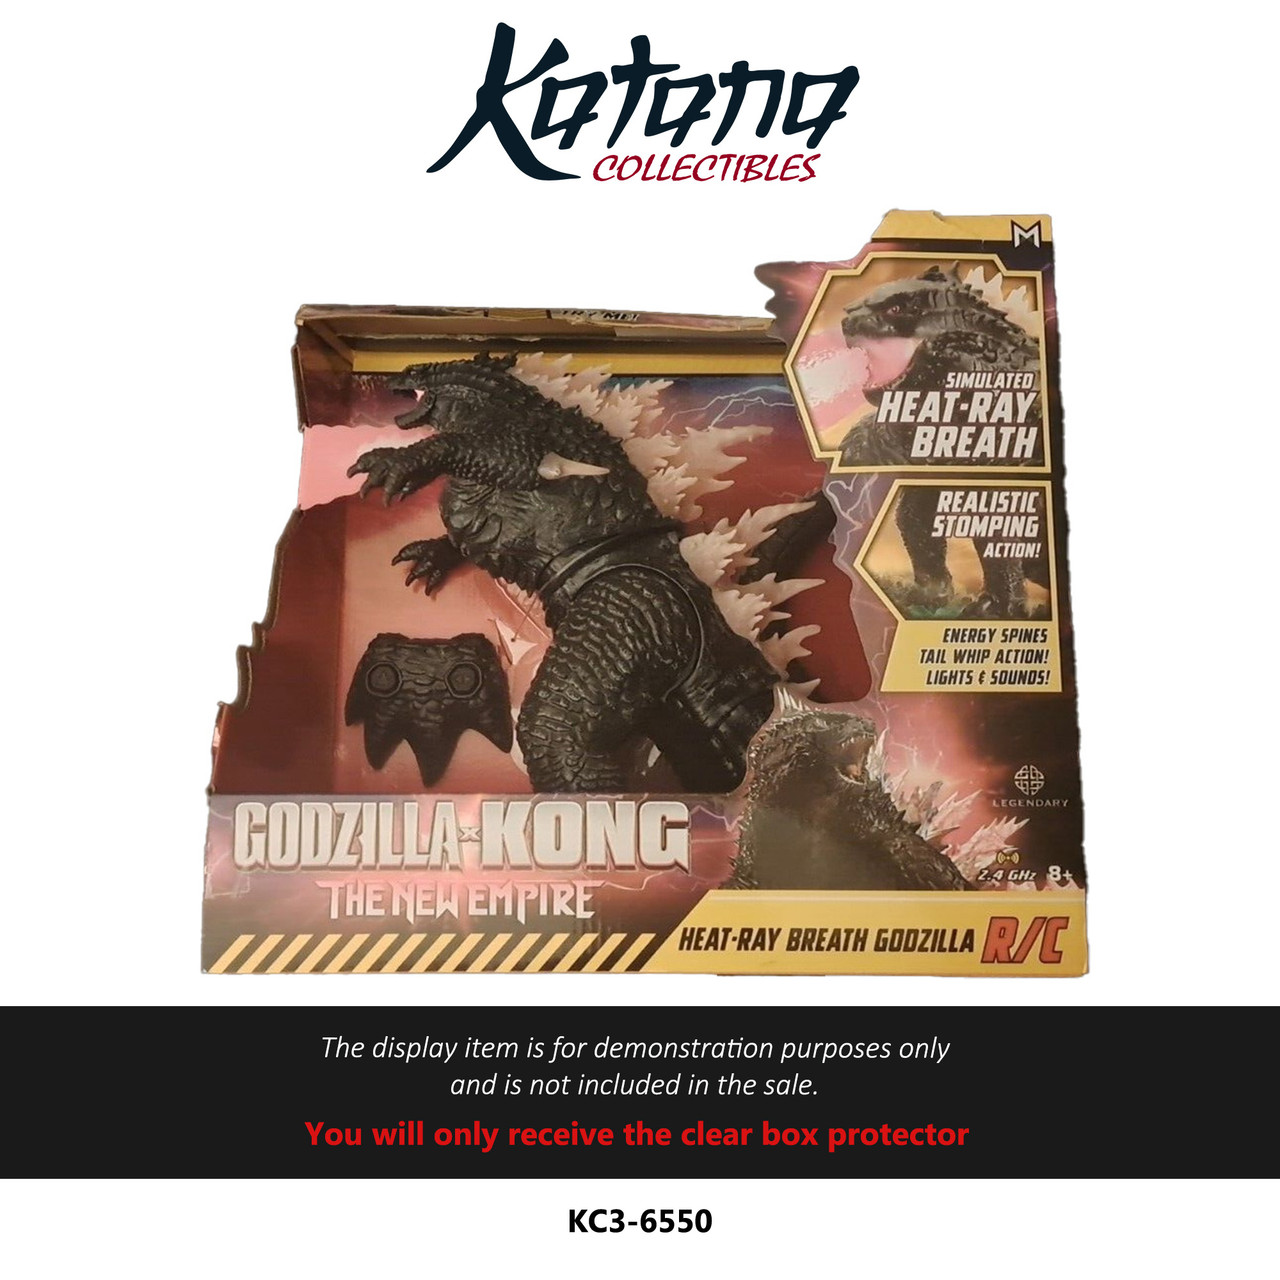 Katana Collectibles Protector For Jada Godzilla X Kong: The New Empire Heat-Ray Breath Godzilla Rc Remote Control